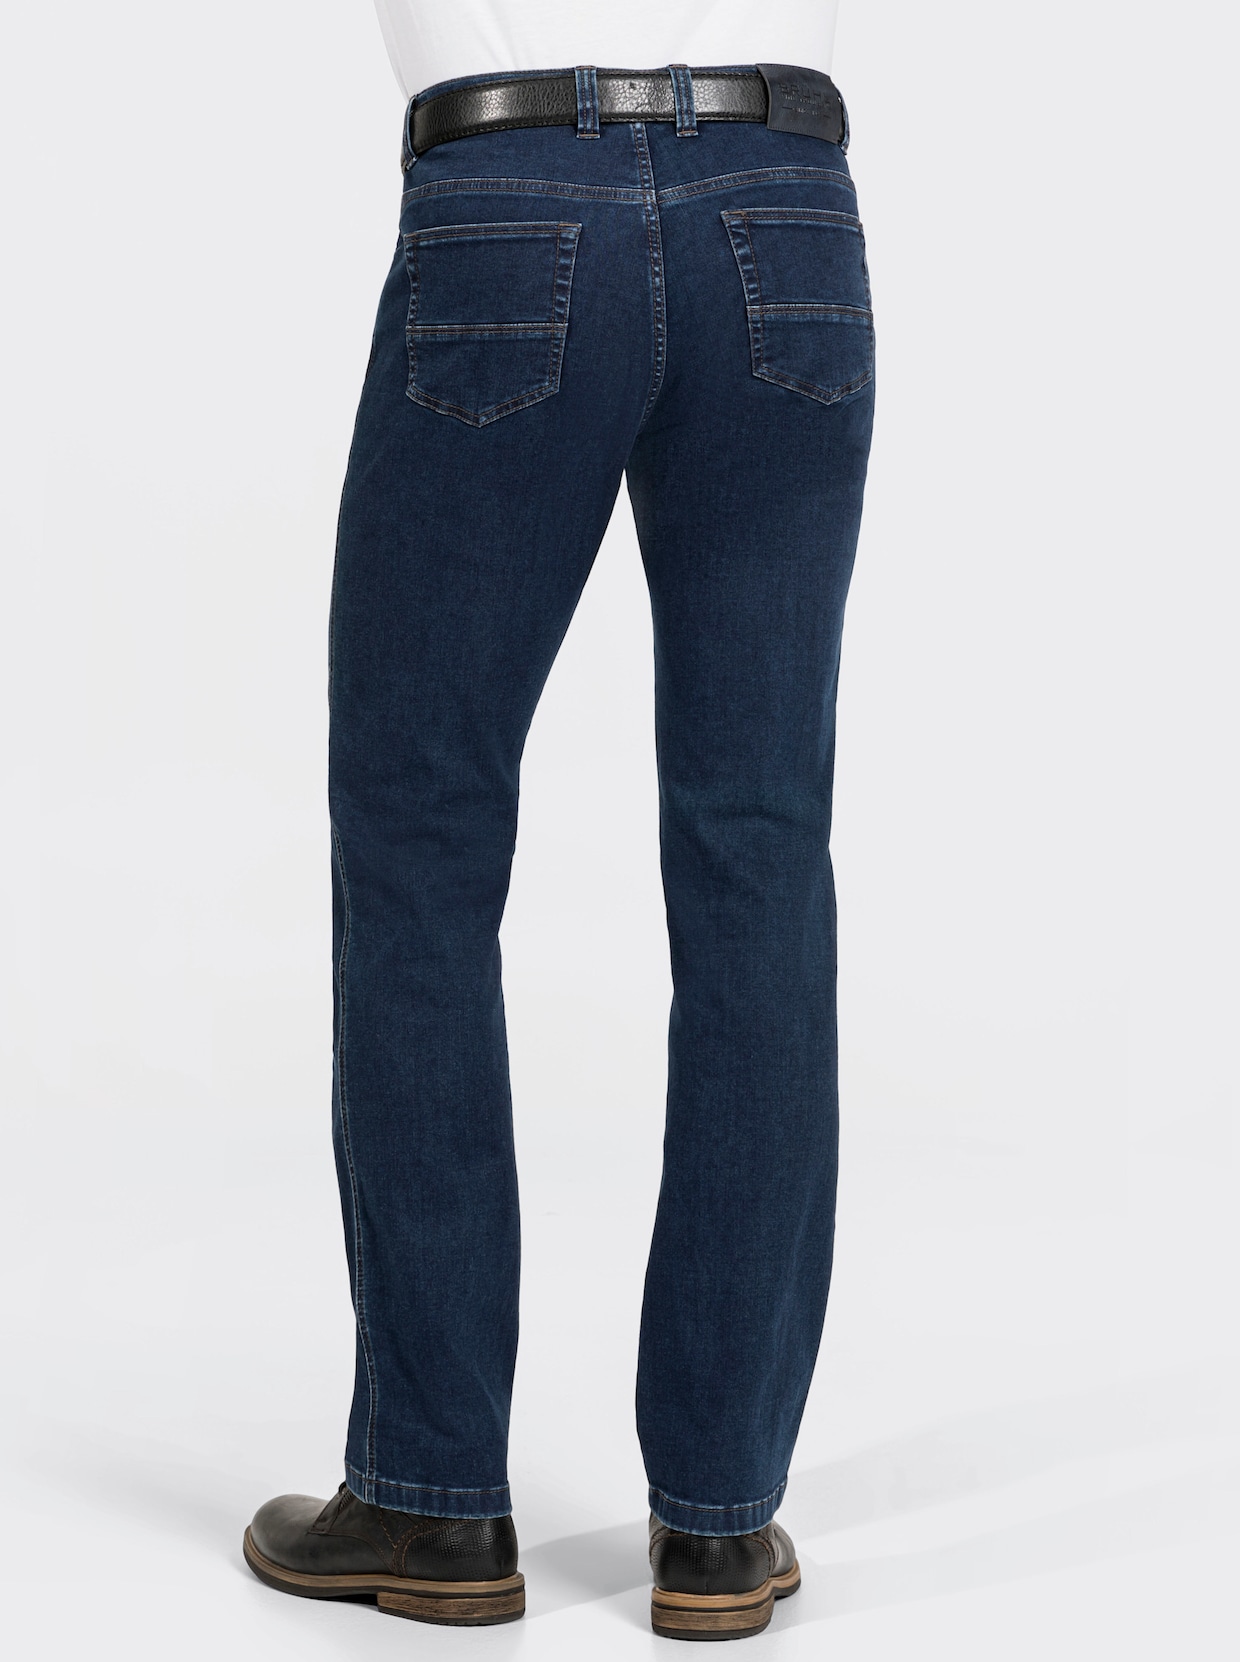 Brühl jeans - dark blue-denim